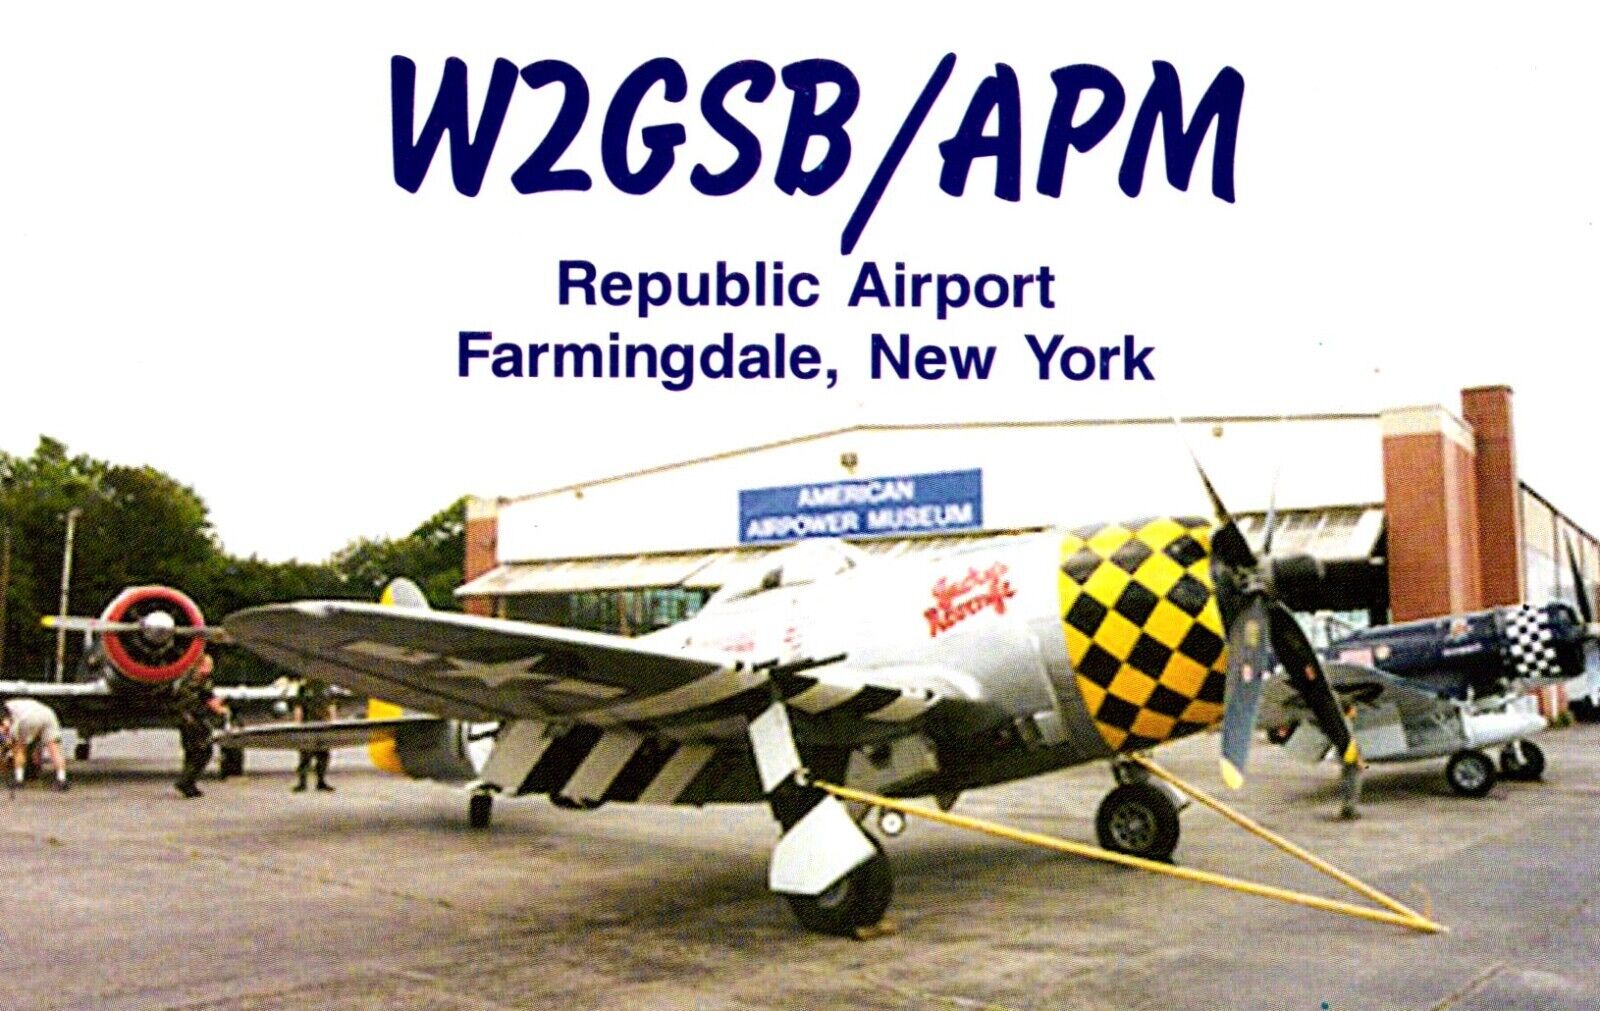 Republic Airport Farmingdale New York W2GSB/APM QSL Radio Postcard